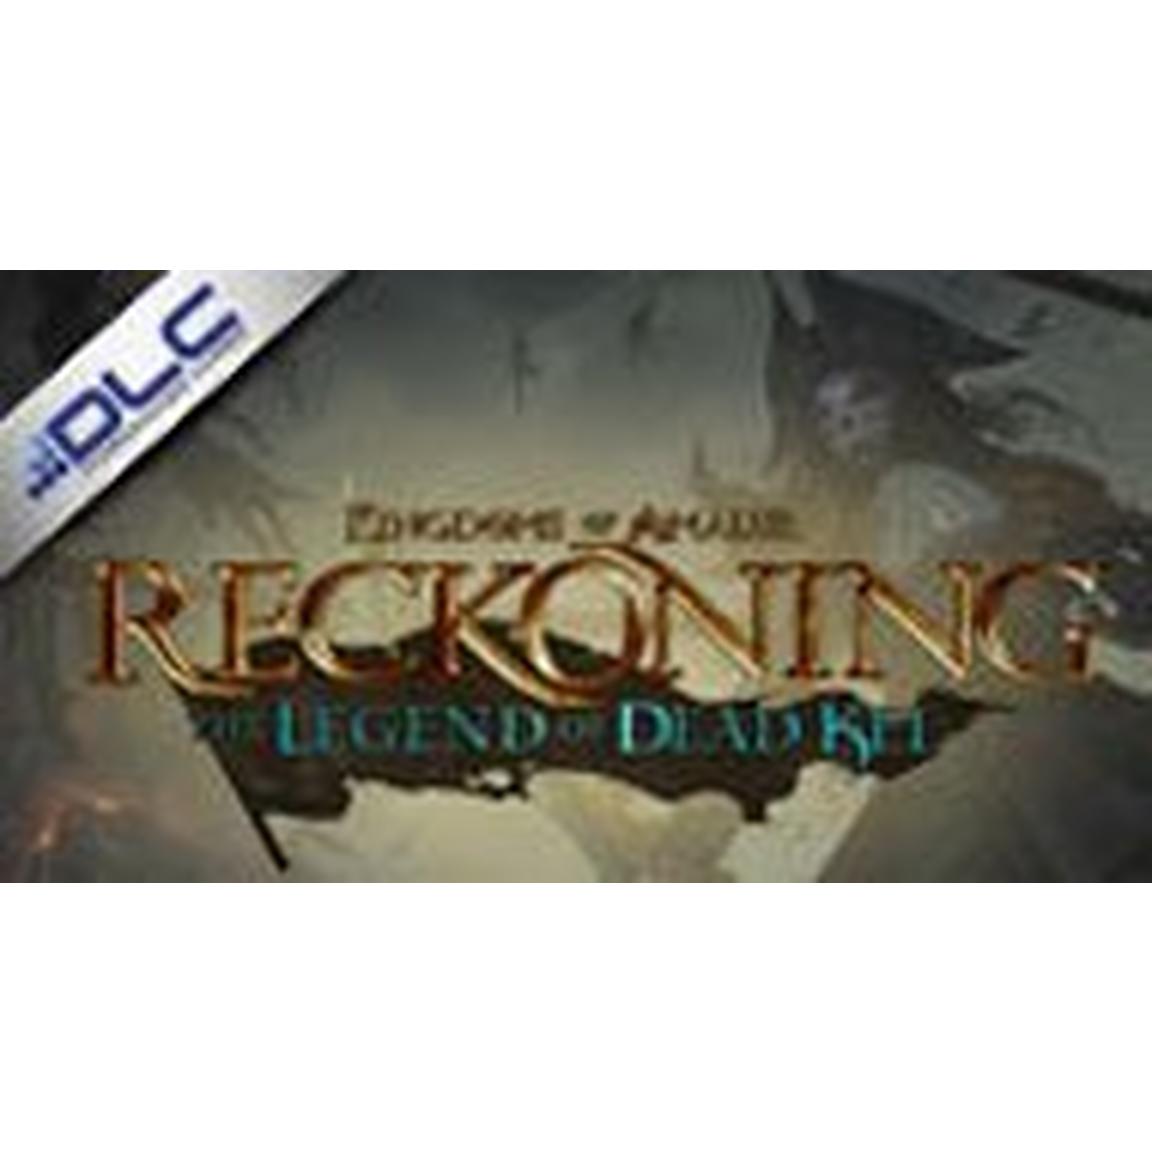 Electronic Arts Kingdoms of Amalur: Reckoning - The Legend of Dead Kel DLC - PC EA app